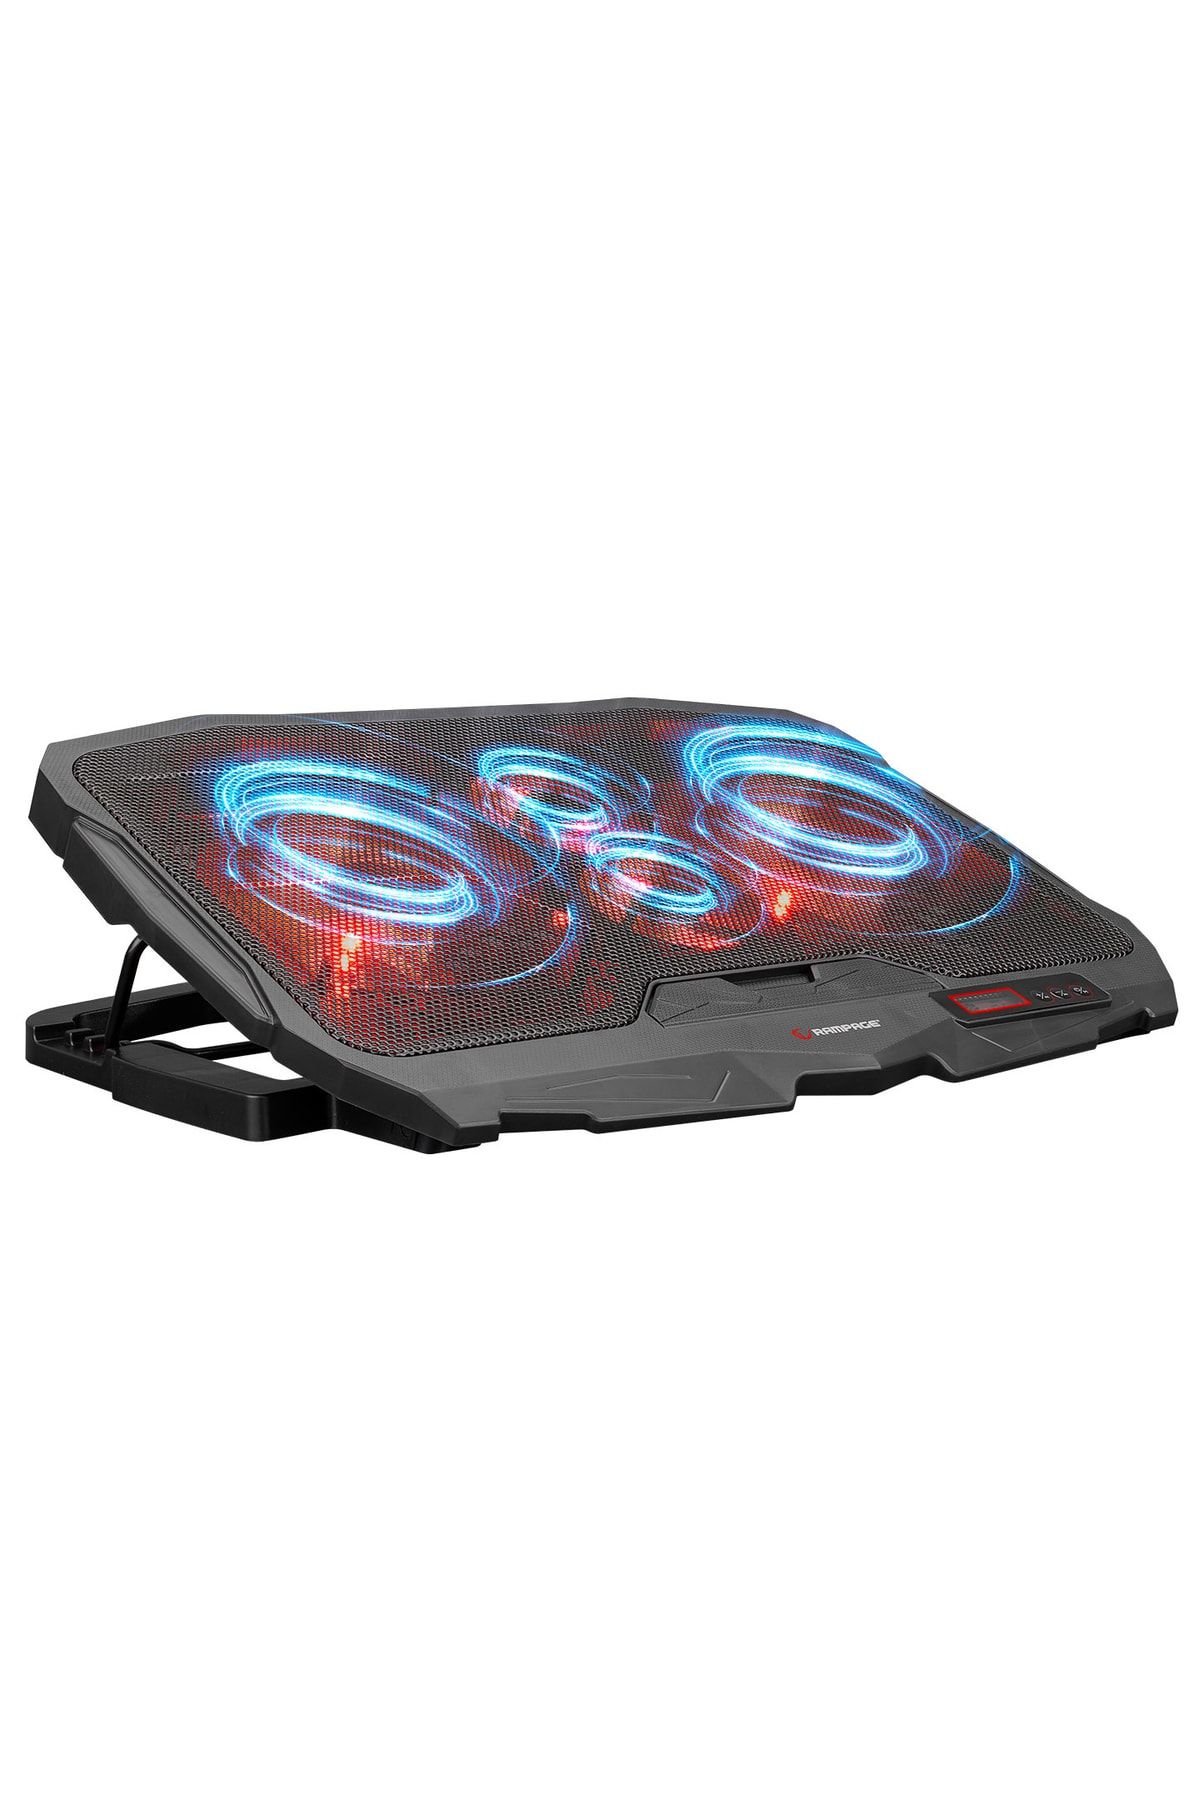 Rampage Ad-rc4 Işıklı Gaming Laptop Soğutucu 2x125mm 2x70mm 15-17 Notebook Soğutucu Stand